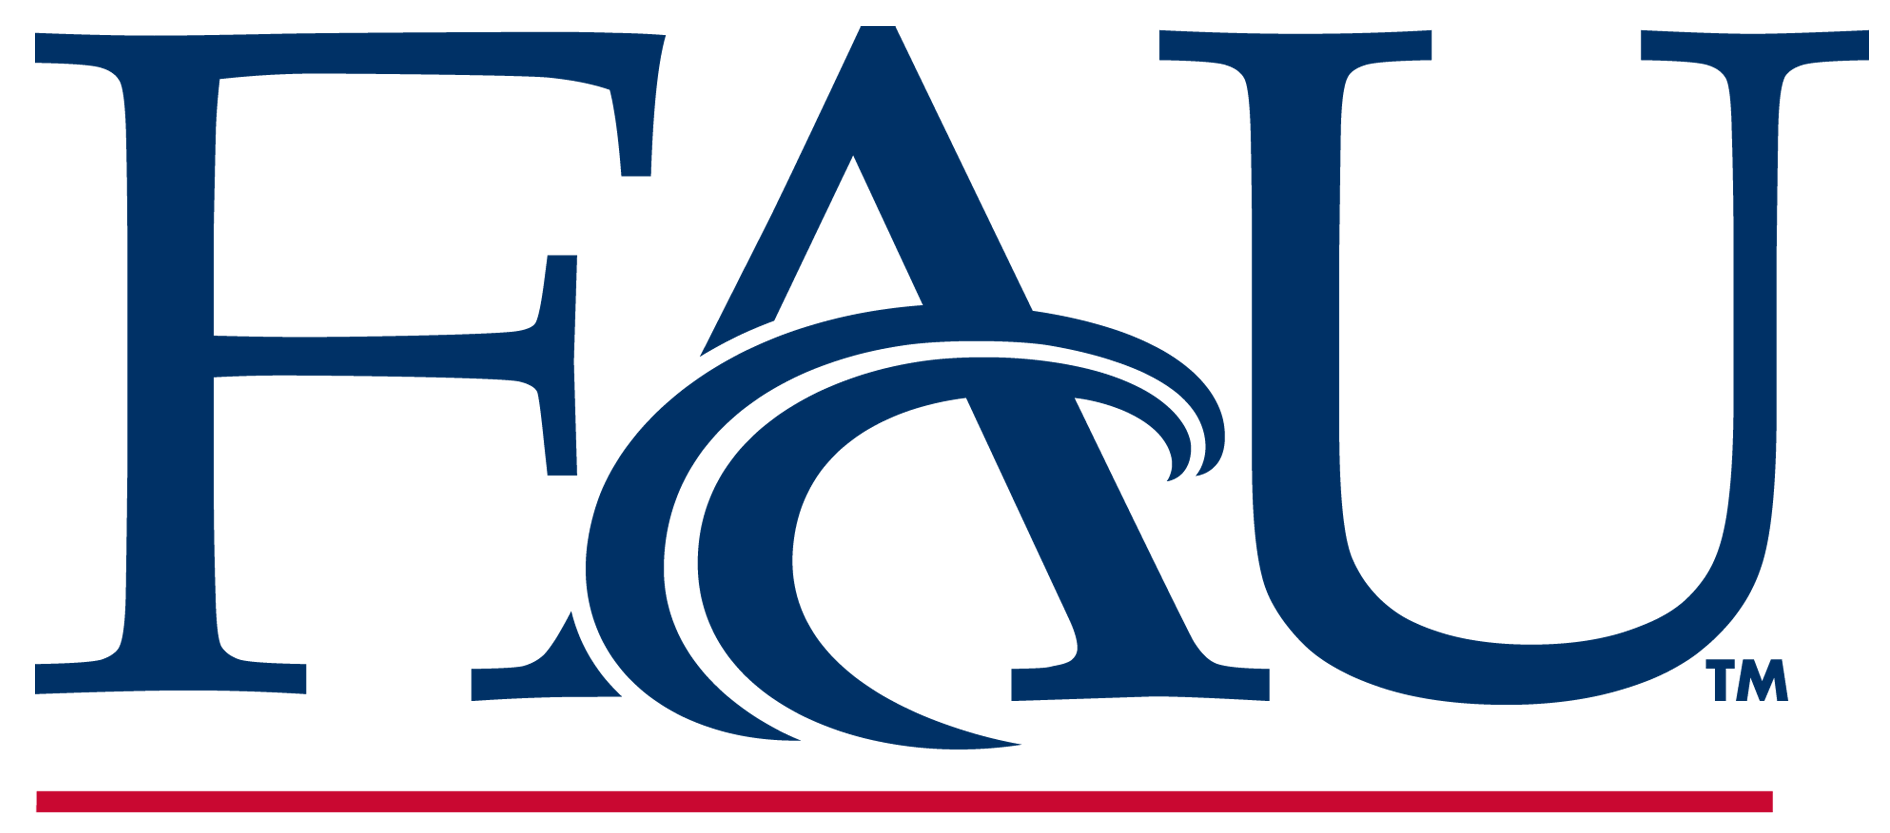 Florida Atlantic University Logo - Dale Gawlik Homepage